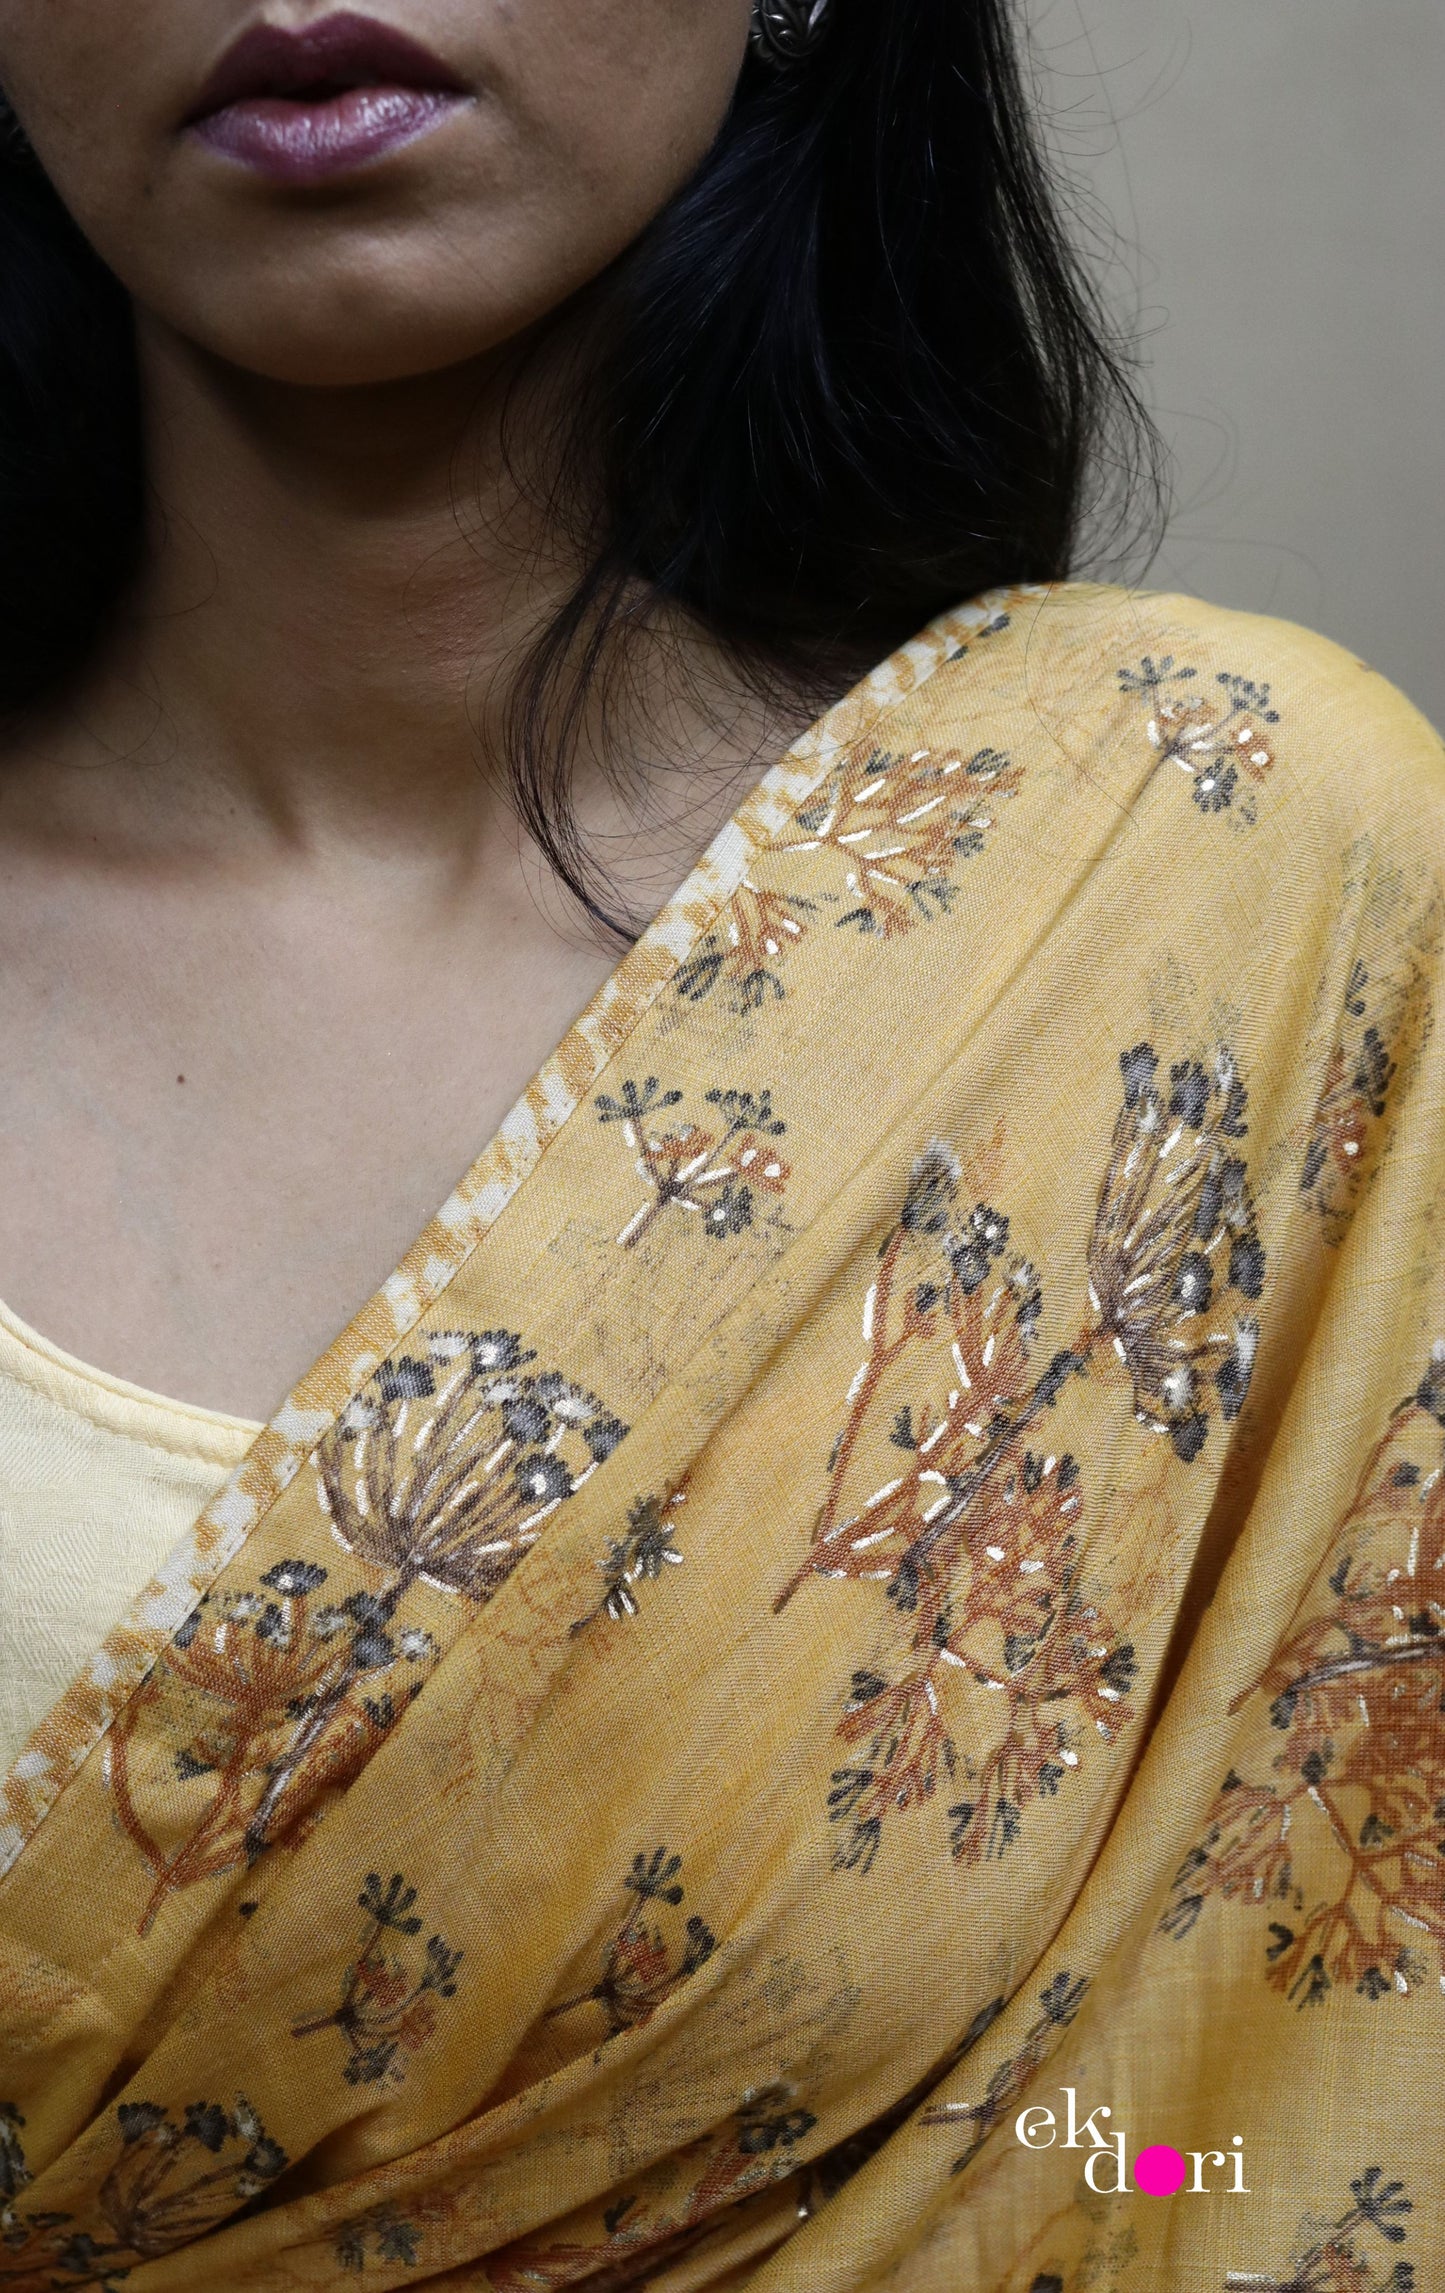 Buy Floral Soft Cotton Saree Online : 'Burst Of Sunlight' Soft Cotton Saree